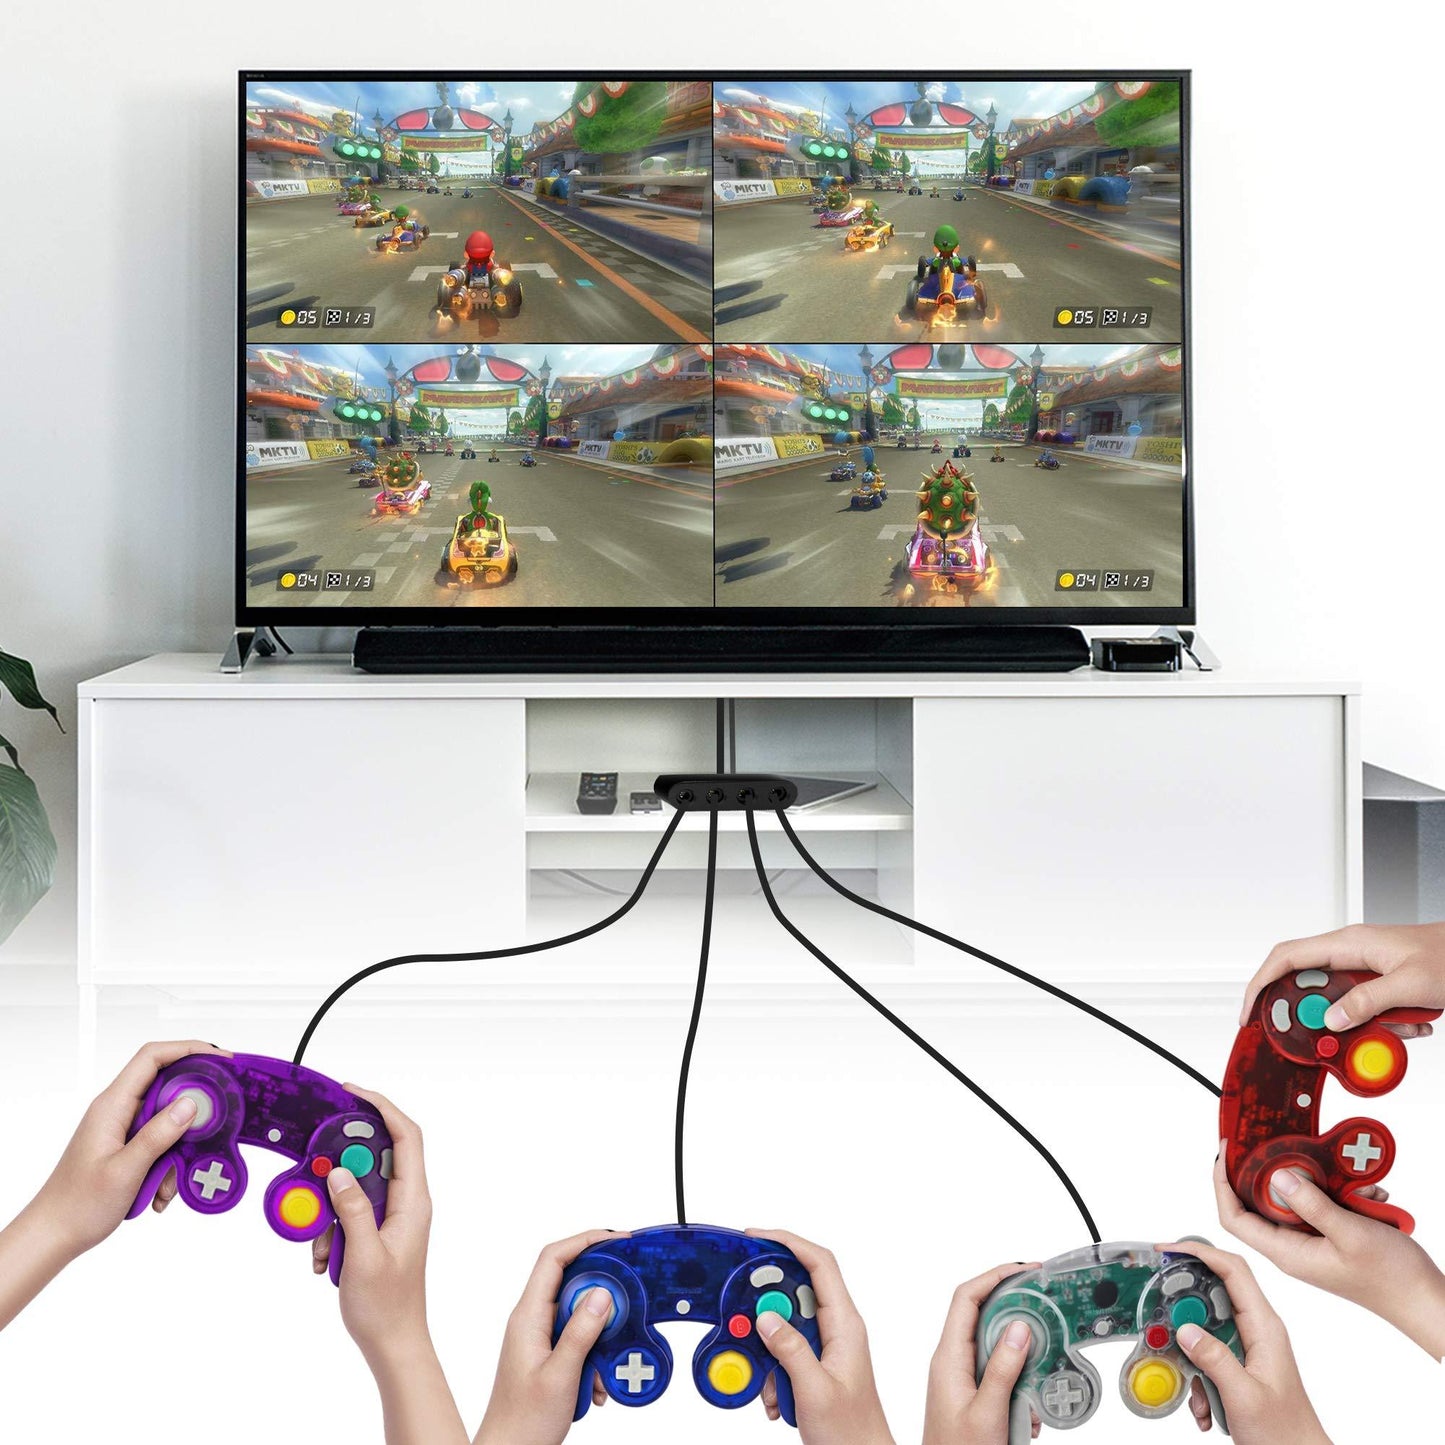 Kit 4 Controles Gamecube para Nintendo Switch con Adaptador - TiendaGeek.com